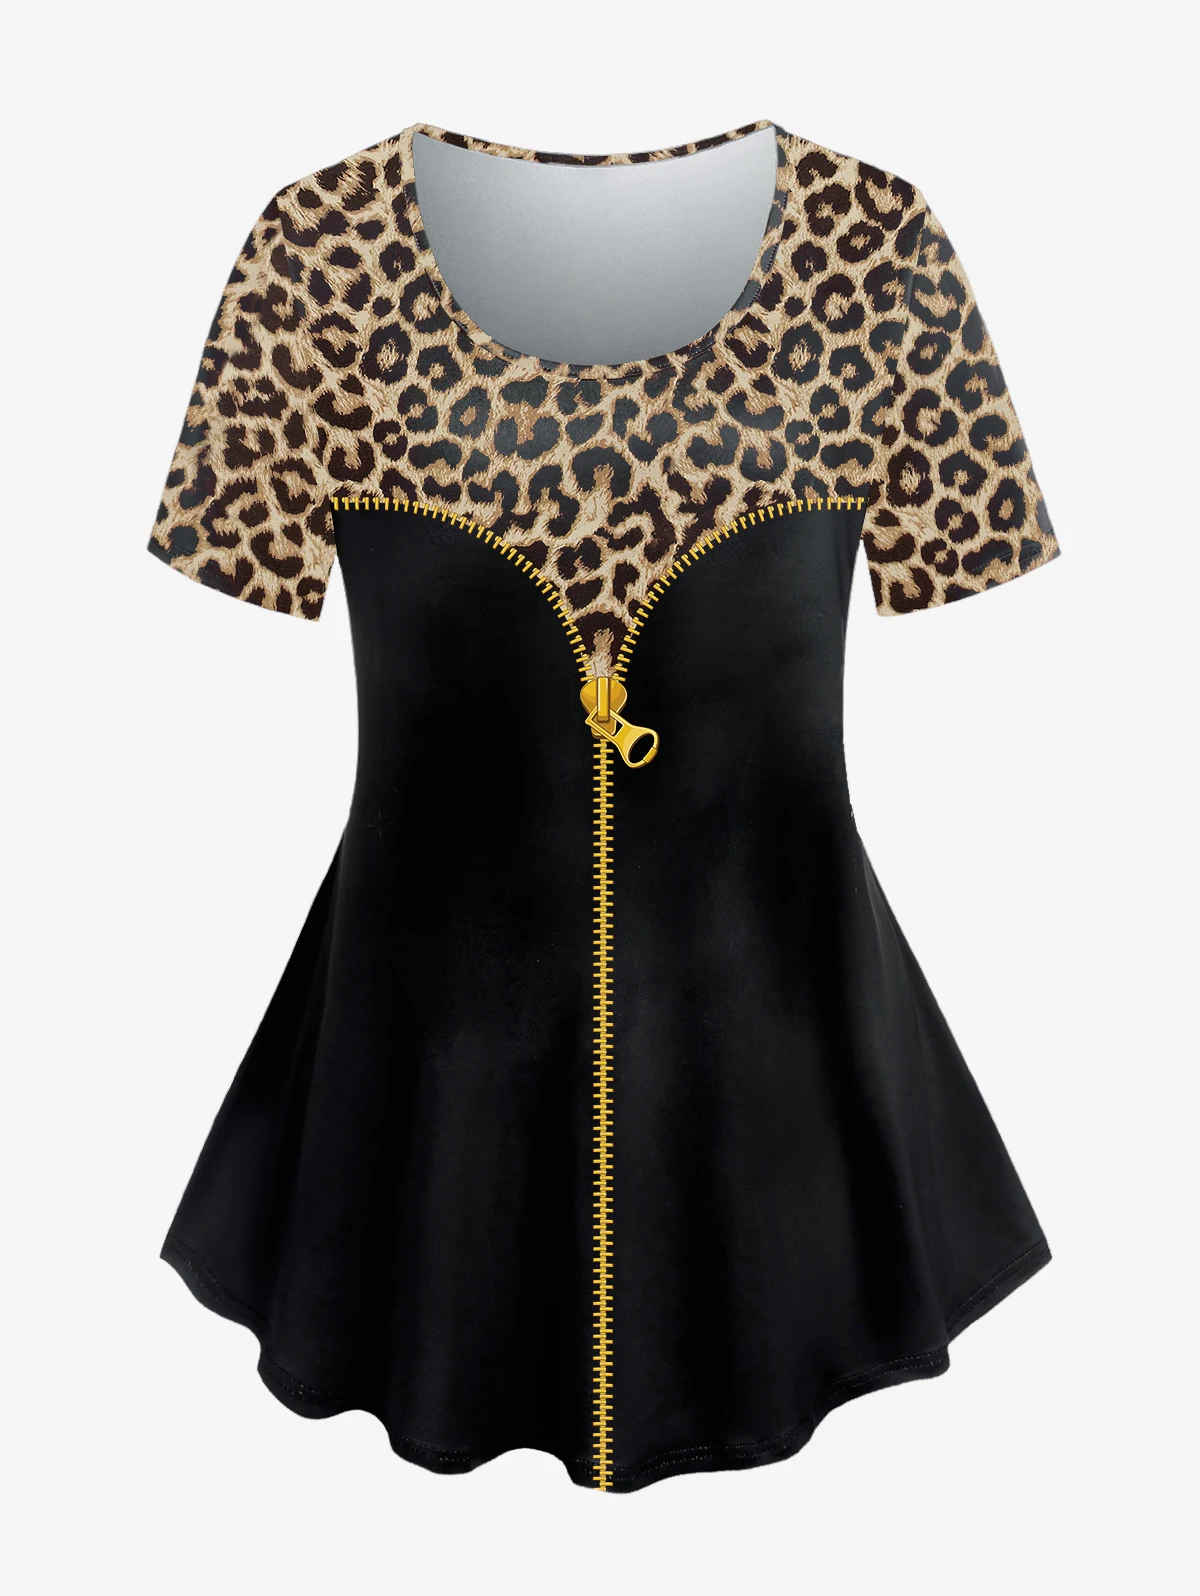 

ROSEGAL Zipper Leopard Print T-shirt Women Casual Top 5XL Summer Scoop Neck Short Sleeve Animal Print Tees For Ladies New Clothe